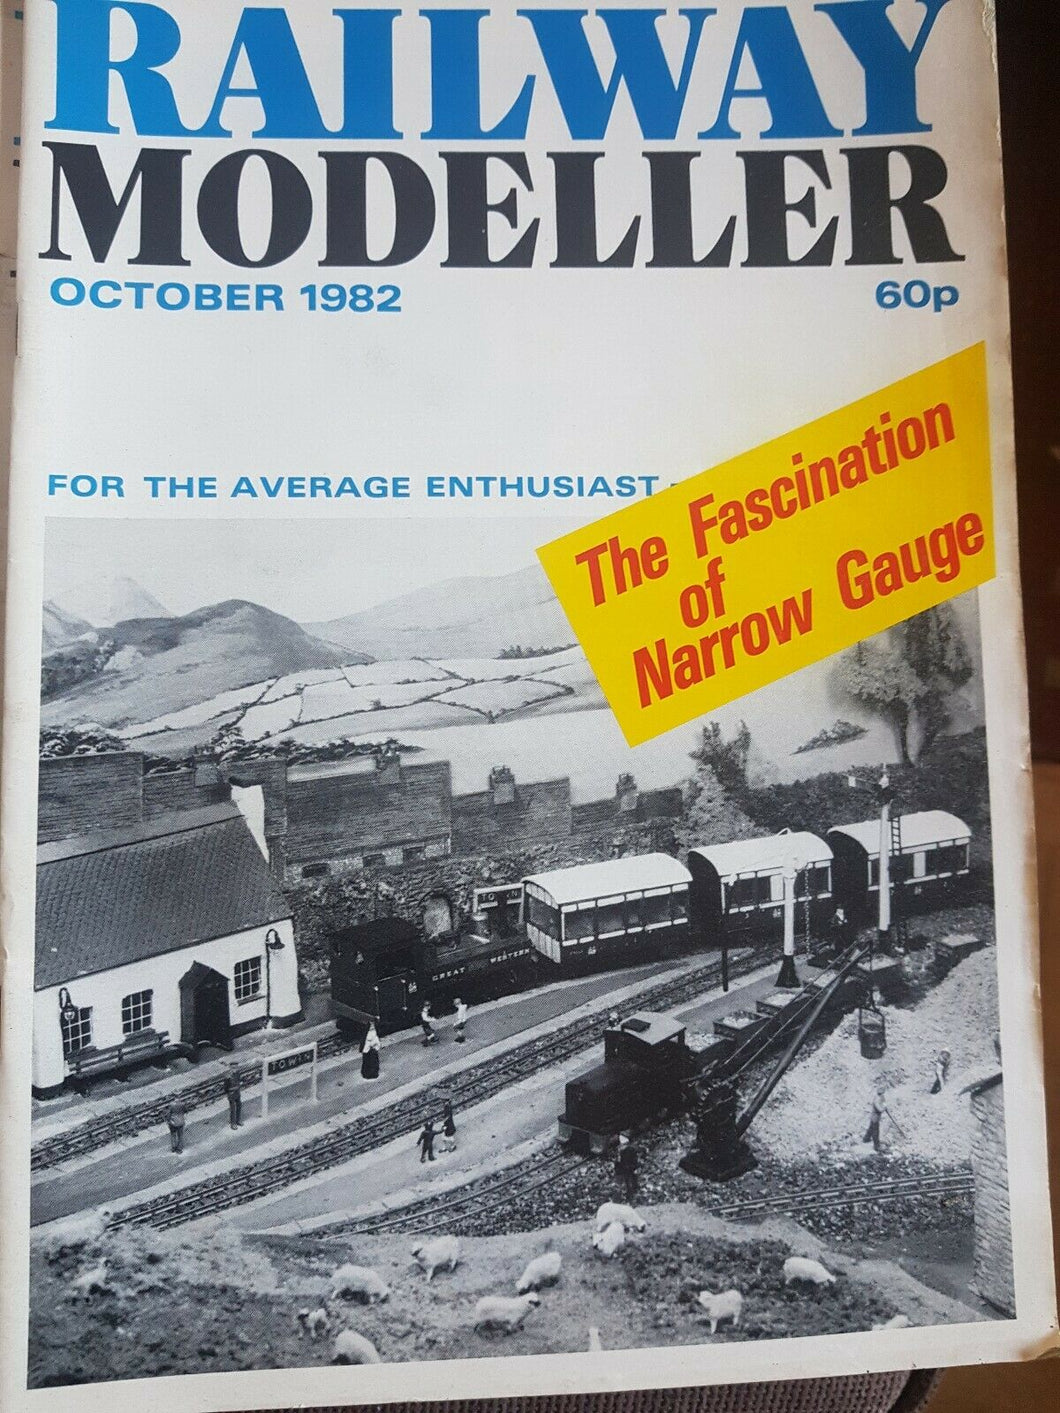 Railway modeller magazine October 1982